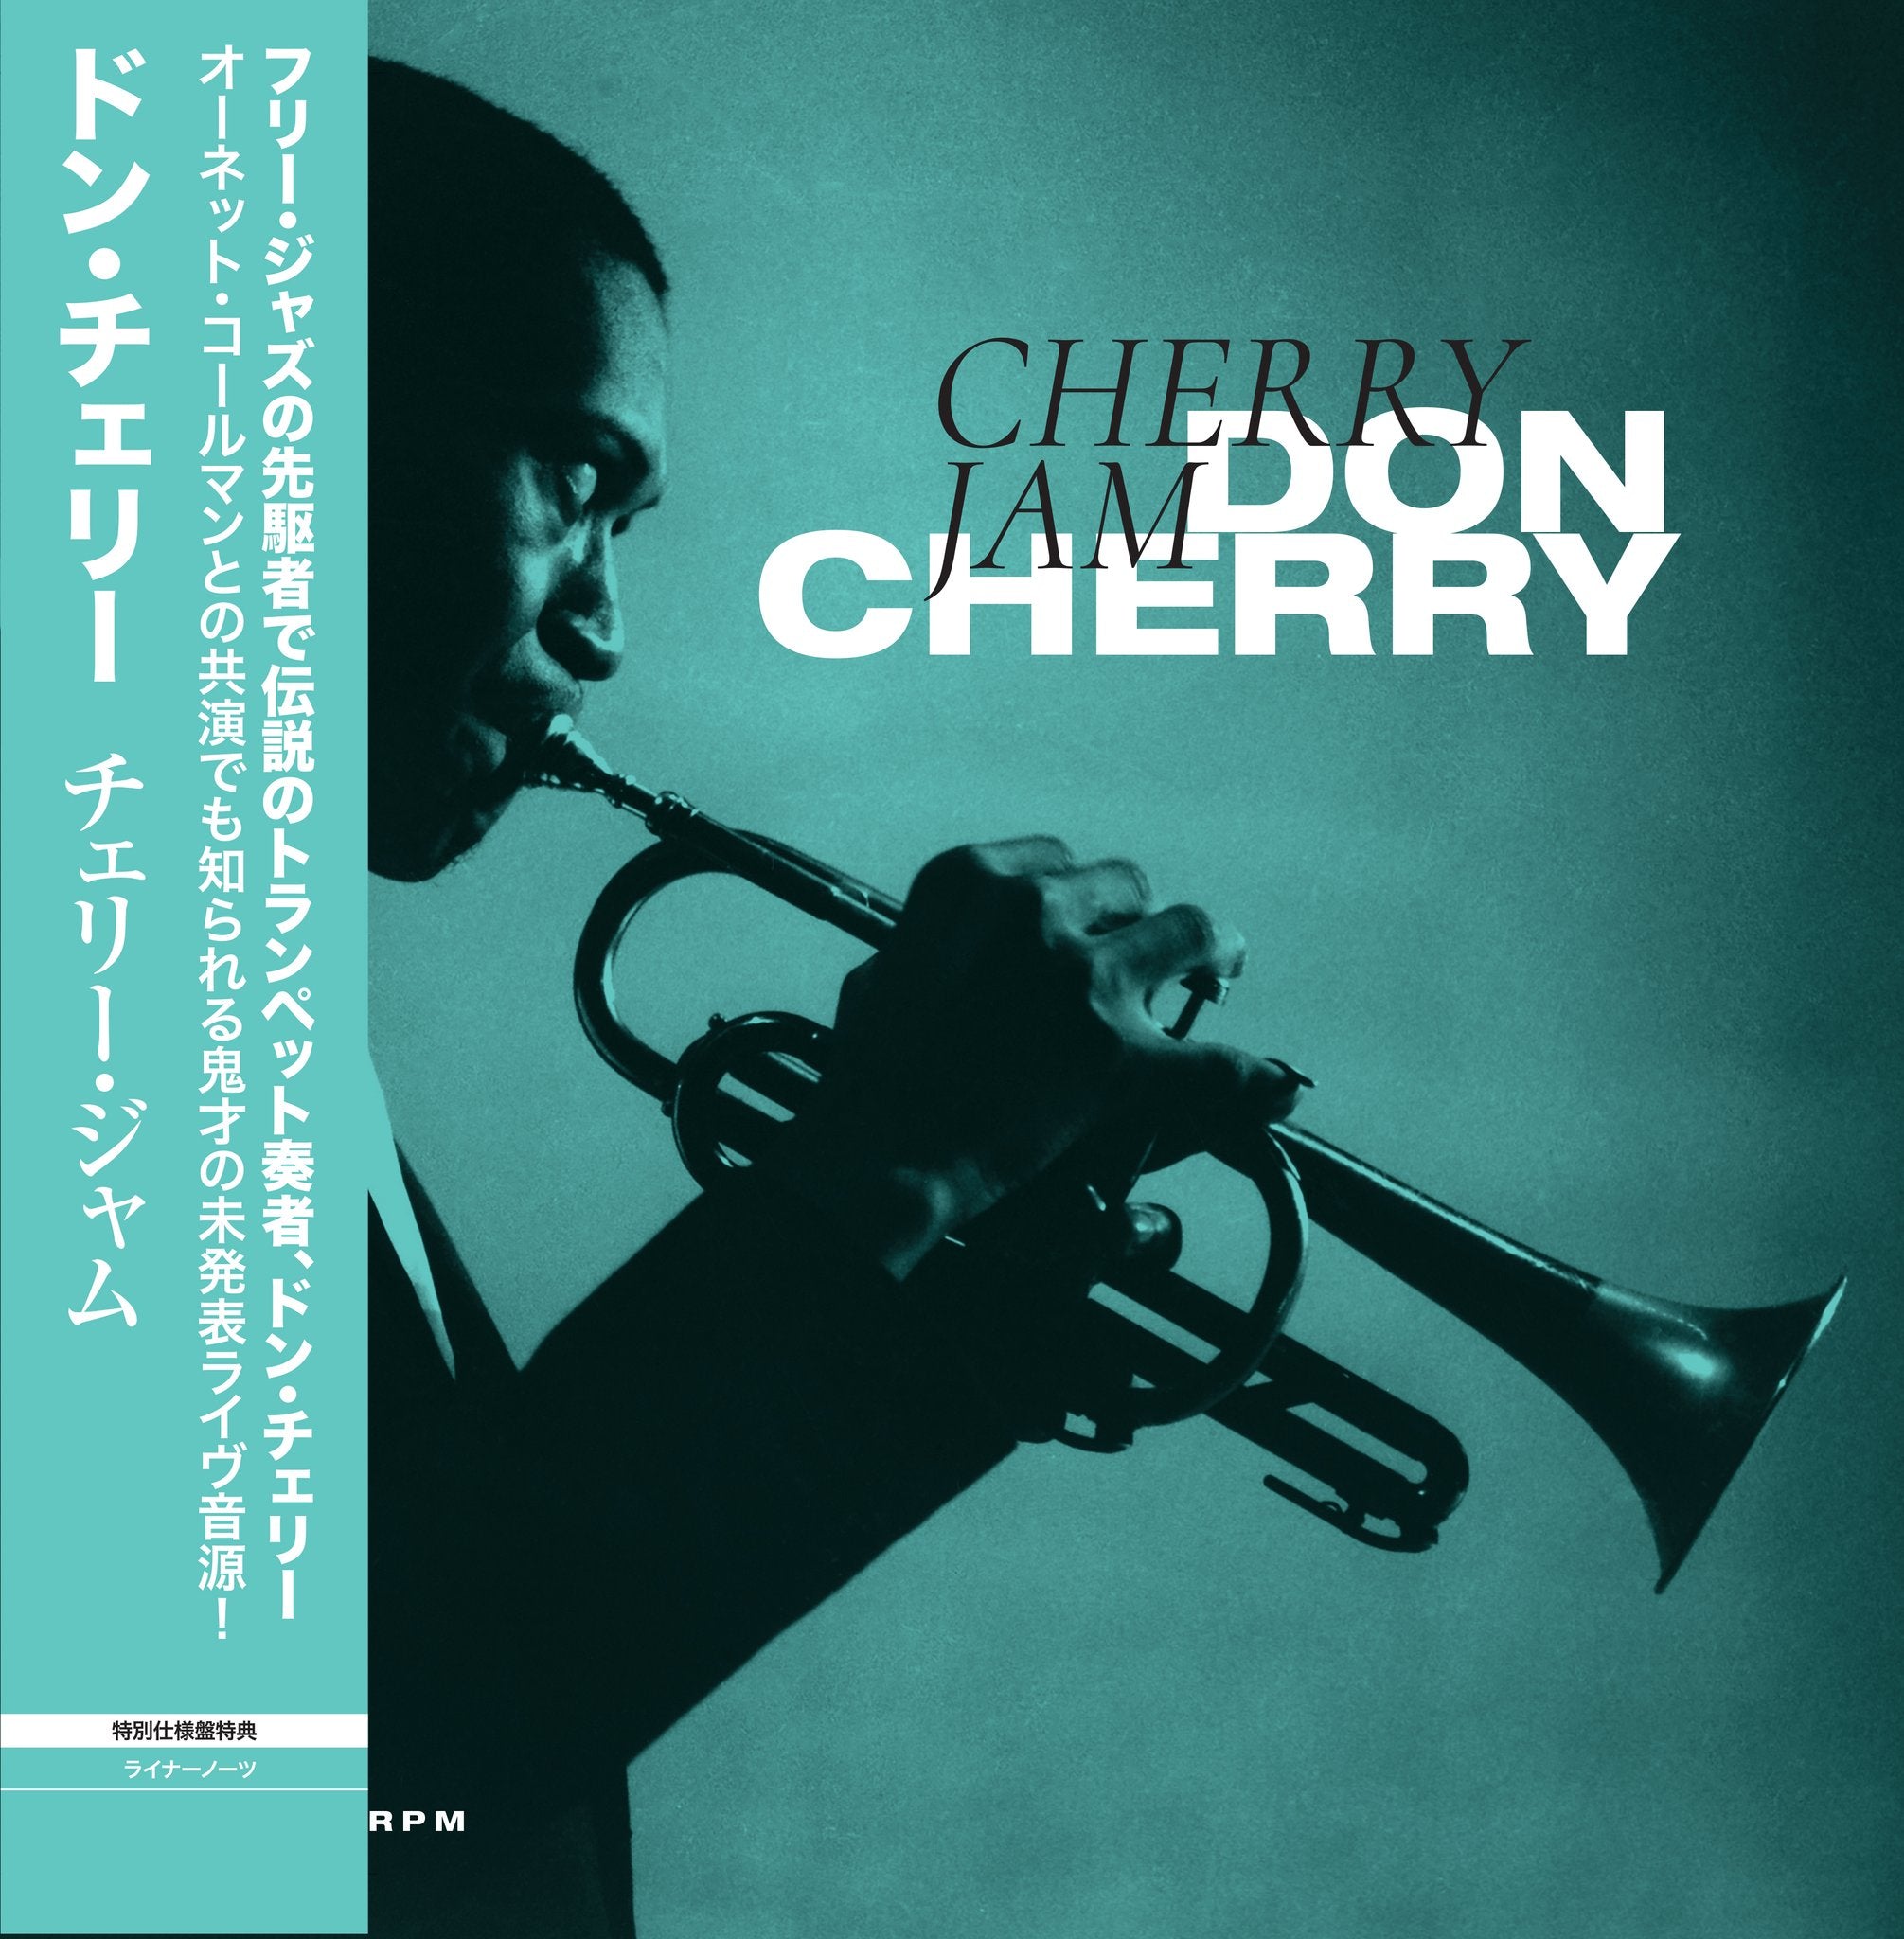 Don Cherry  "Cherry Jam"  1xLP 180g Black Vinyl [45rpm mono]